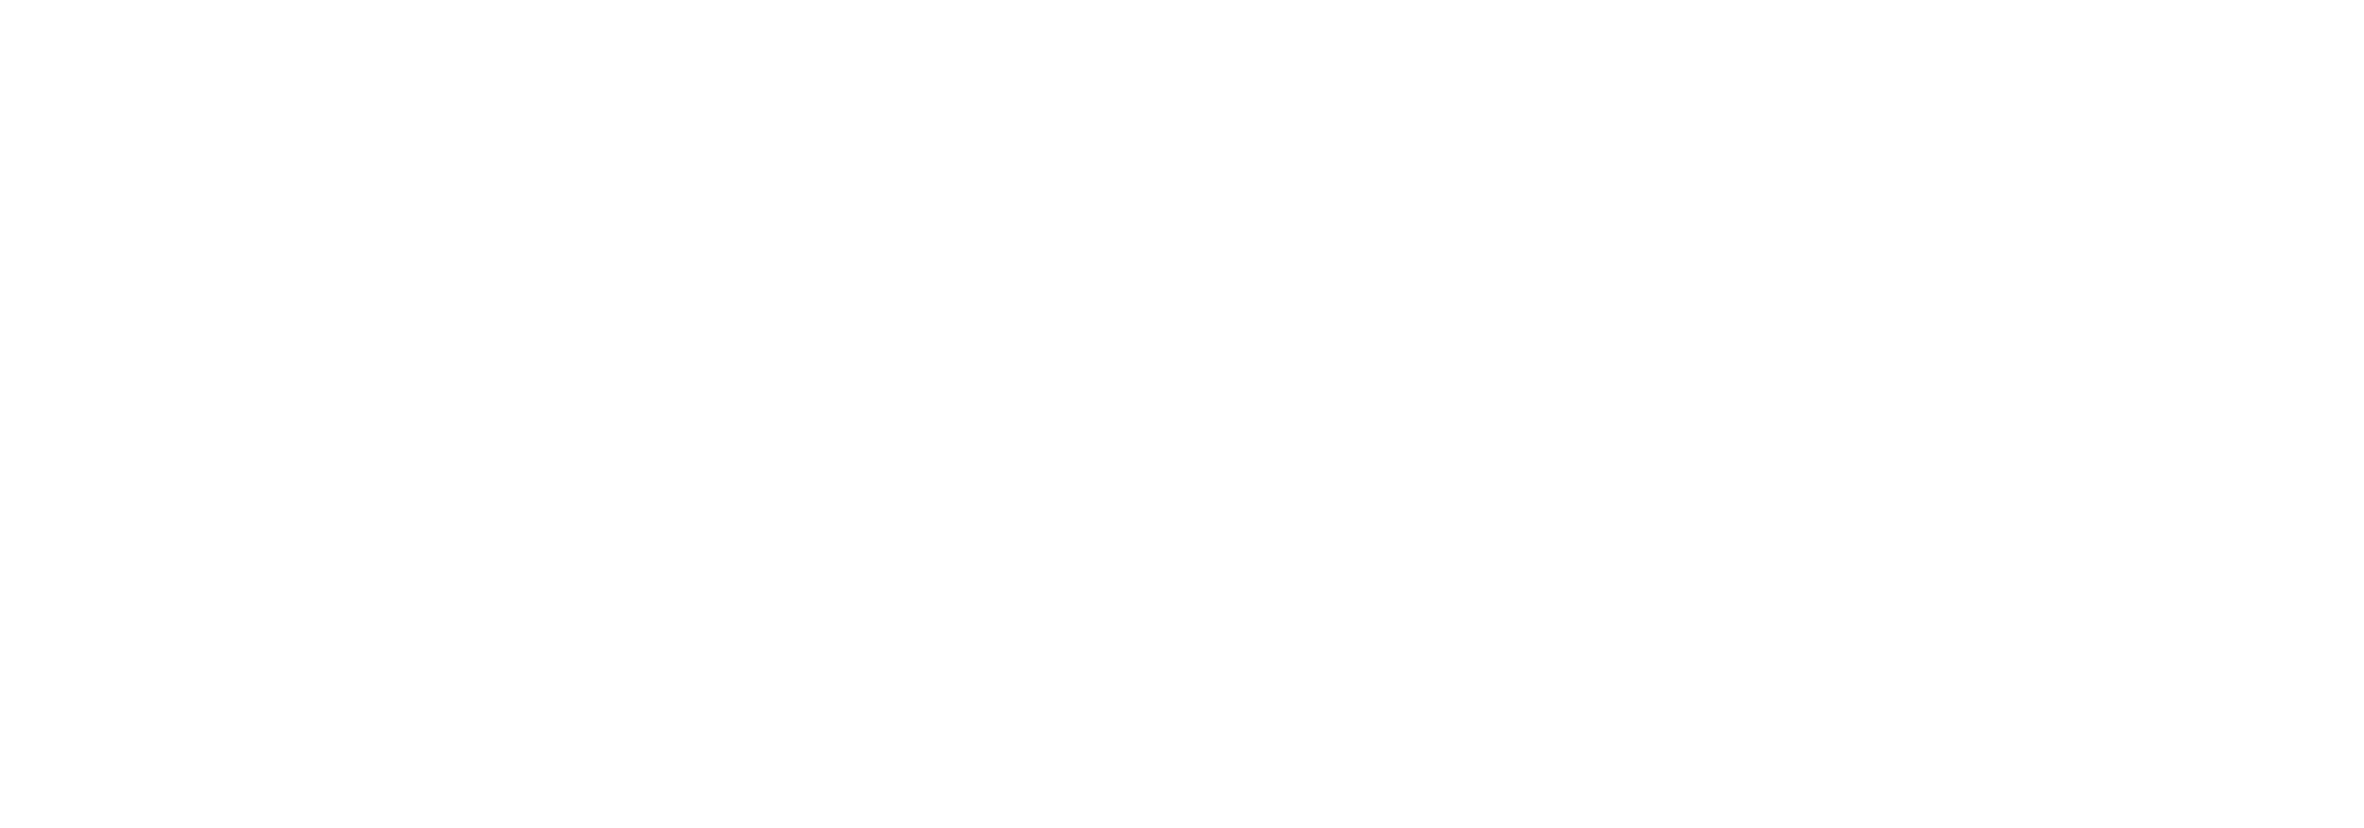 Filerobot dark mode Logo